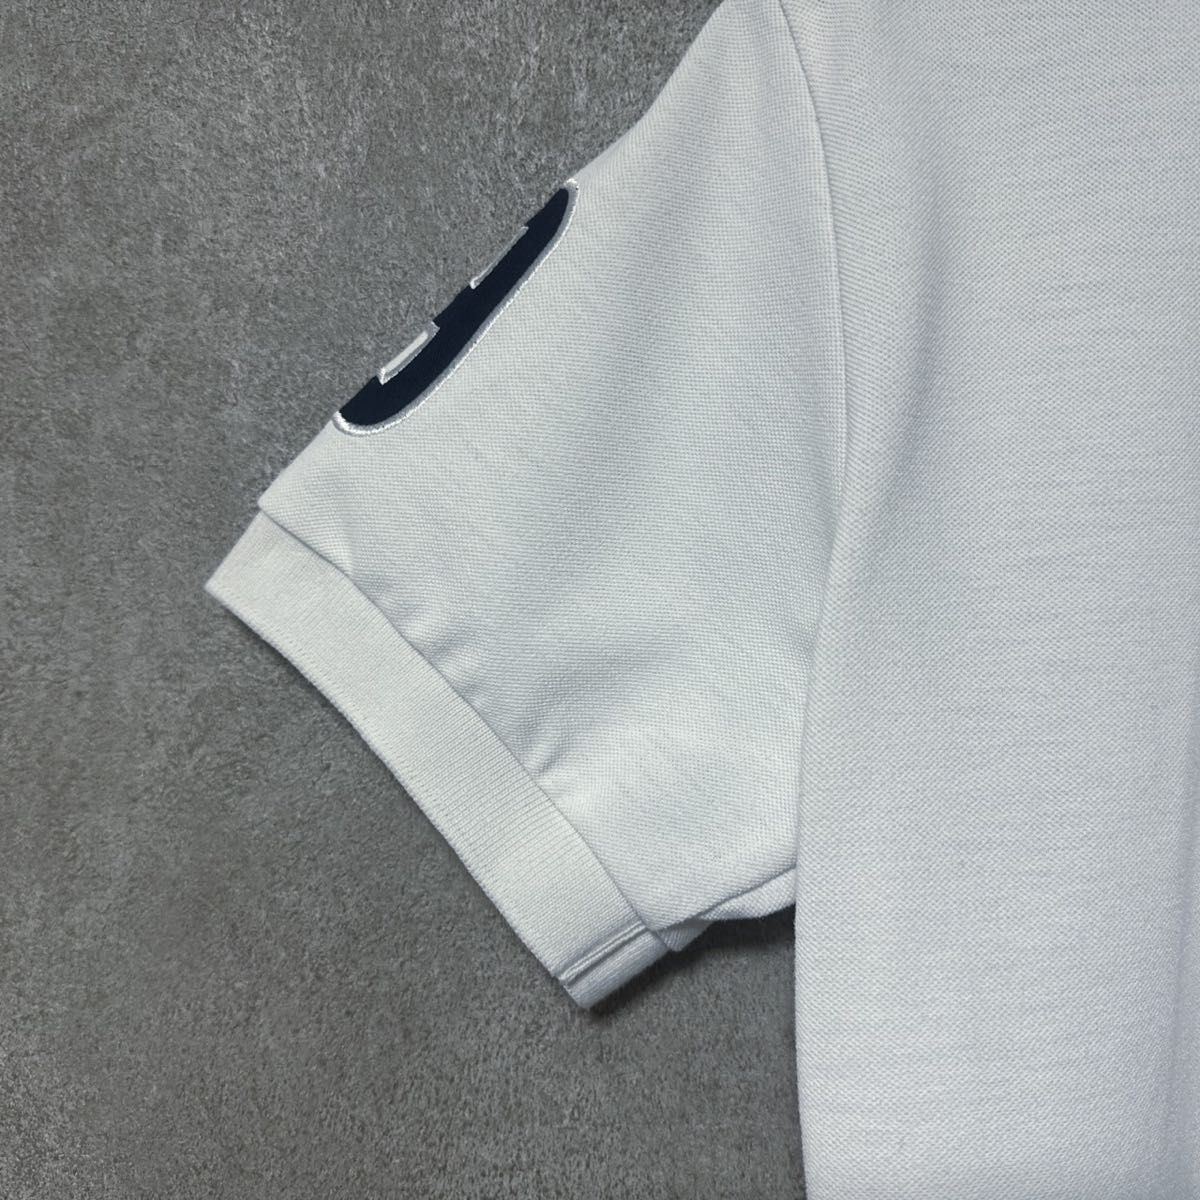 Pearly Gates パーリーゲイツ ロゴ 半袖 ポロシャツ ゴルフ ウェア シャツ メンズ 